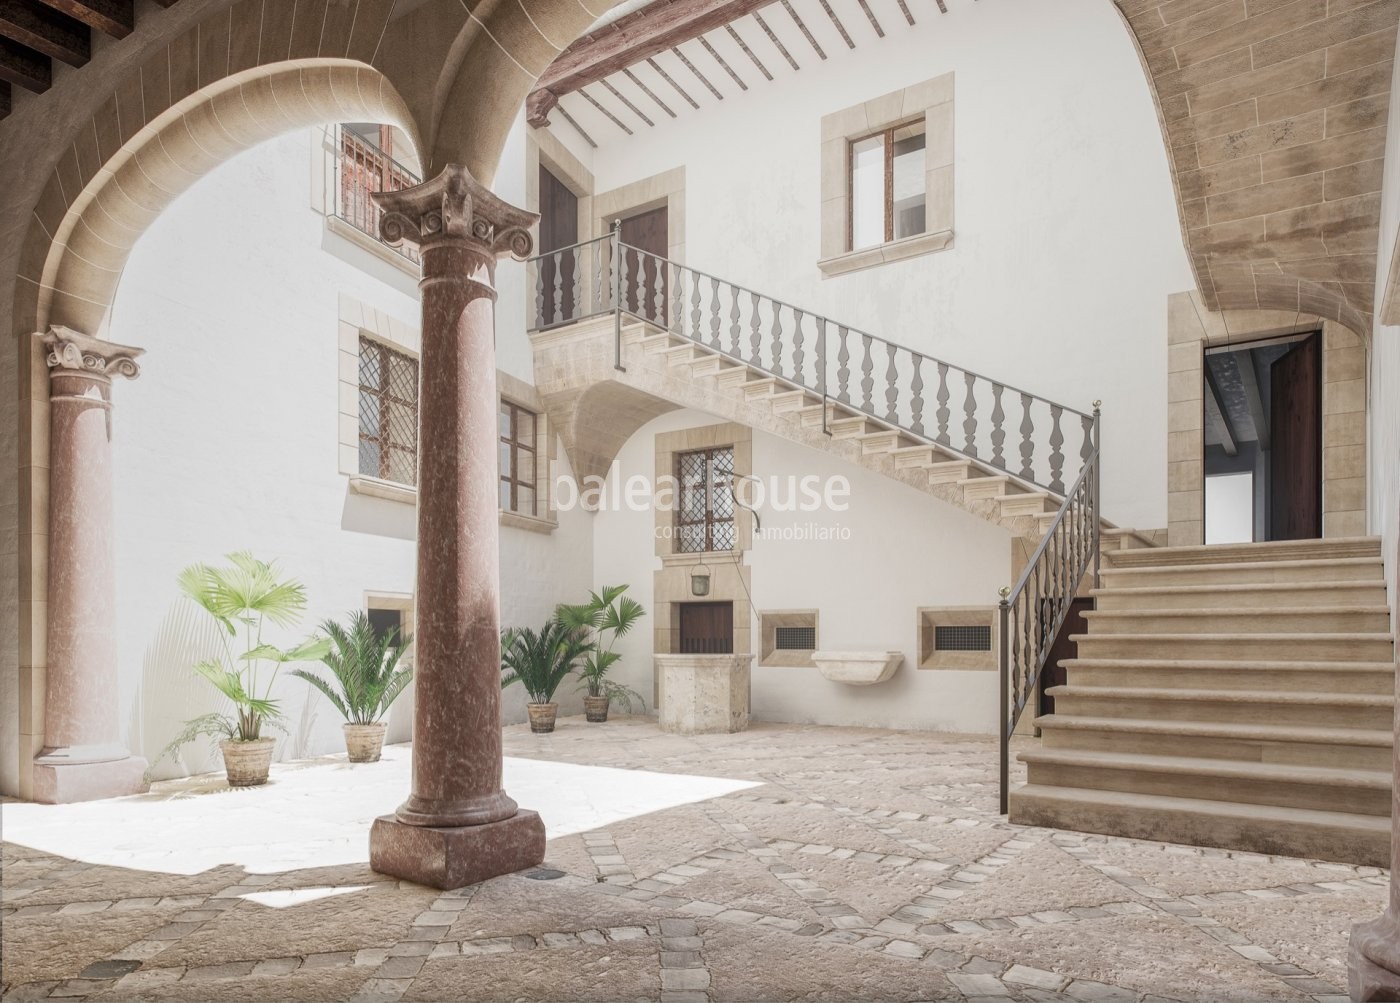 Elegante vivienda dúplex en histórico palacio dentro del casco antiguo de Palma.